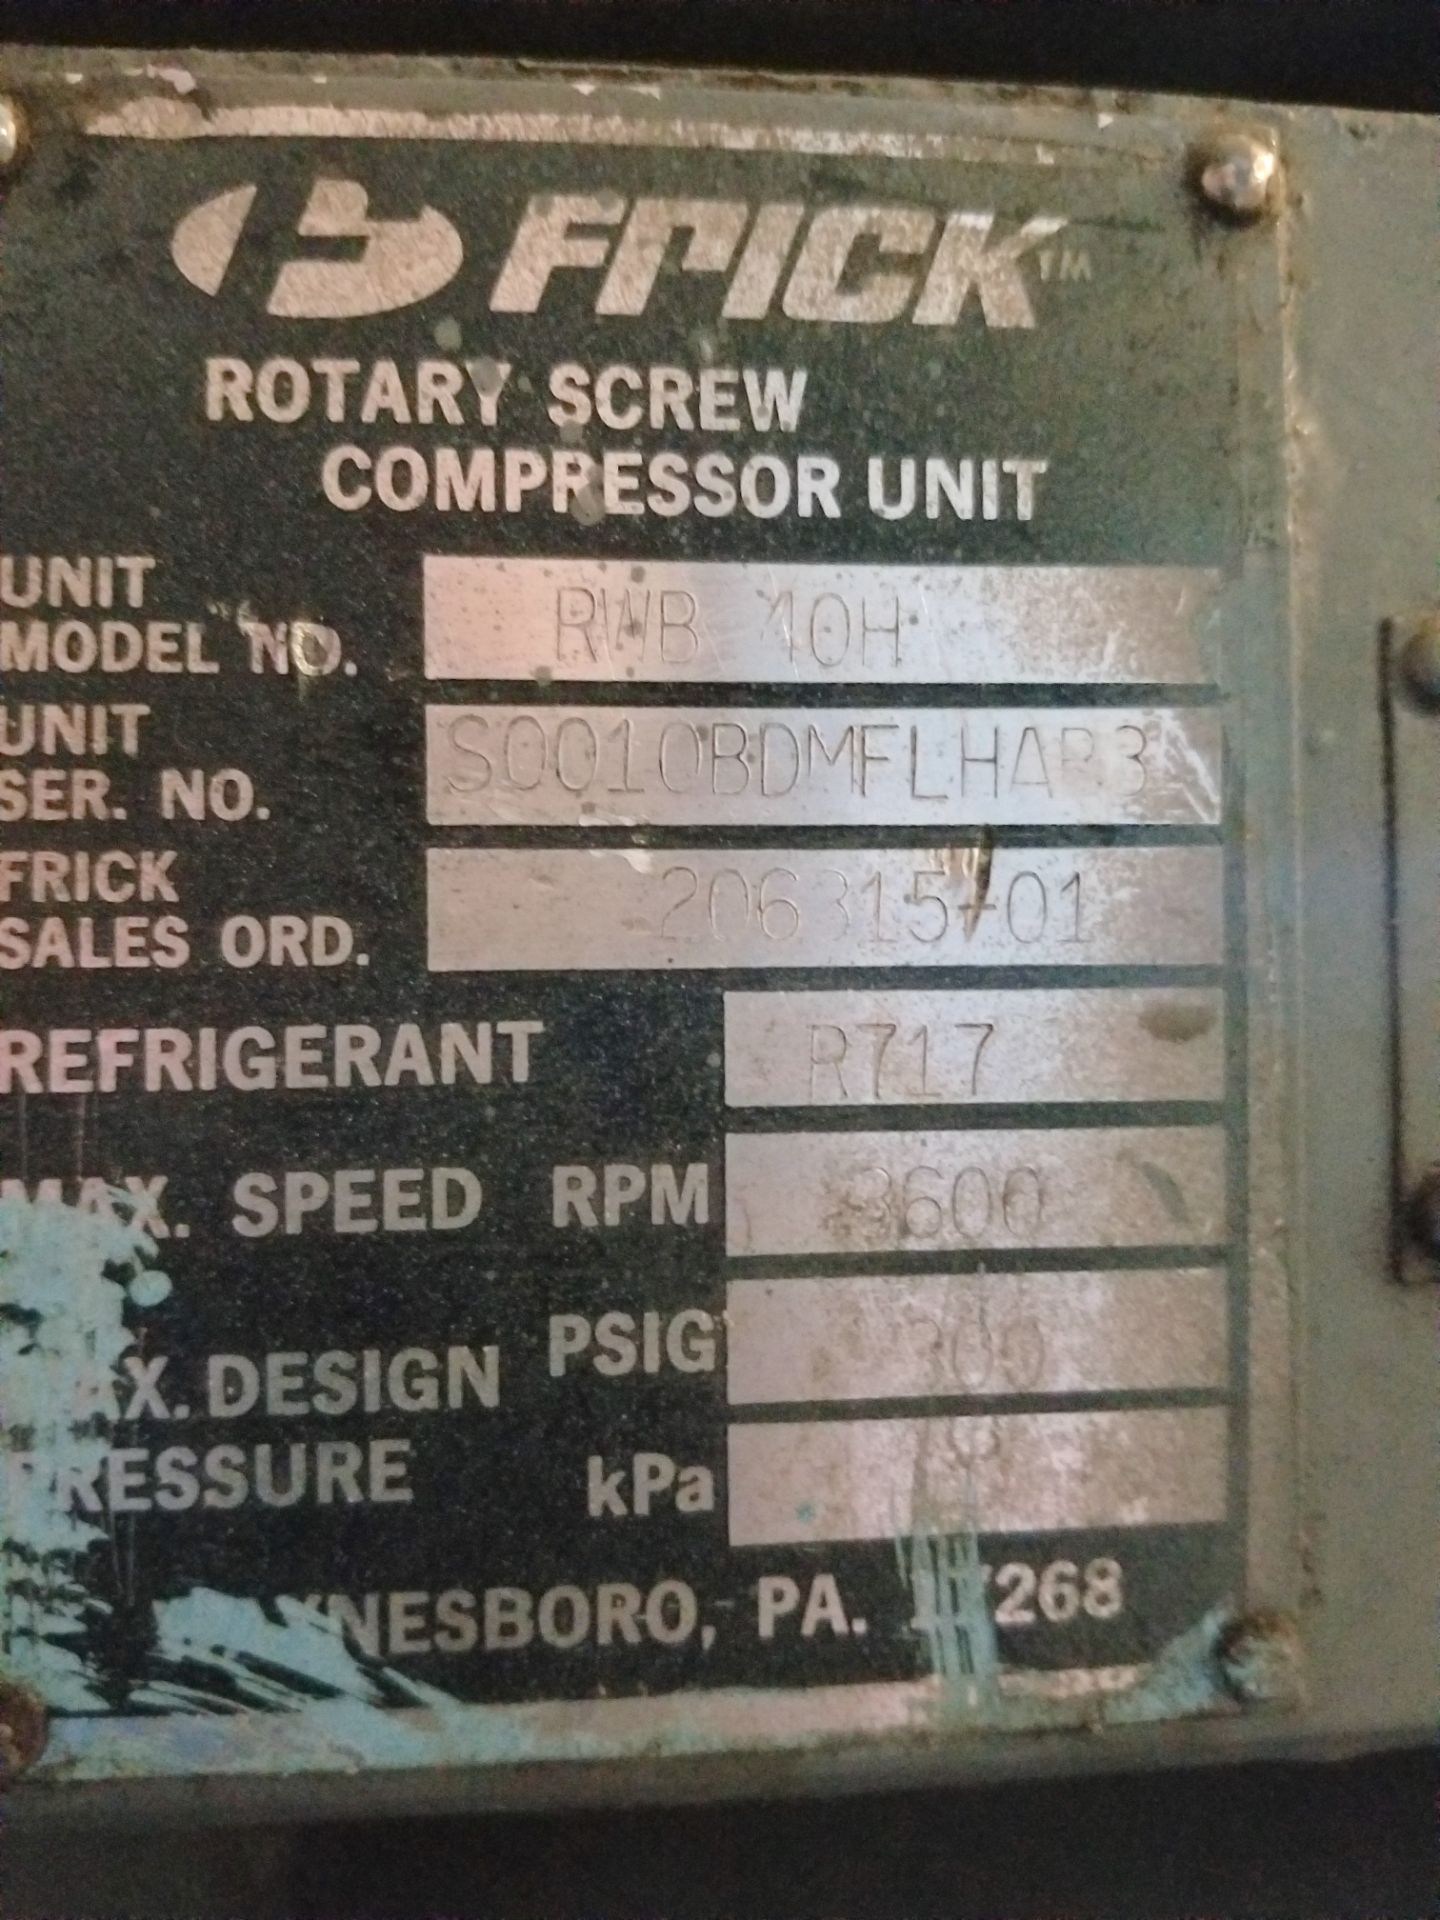 Frick RWB 40H Rotary Screw Ammonia Compressor - Image 7 of 8